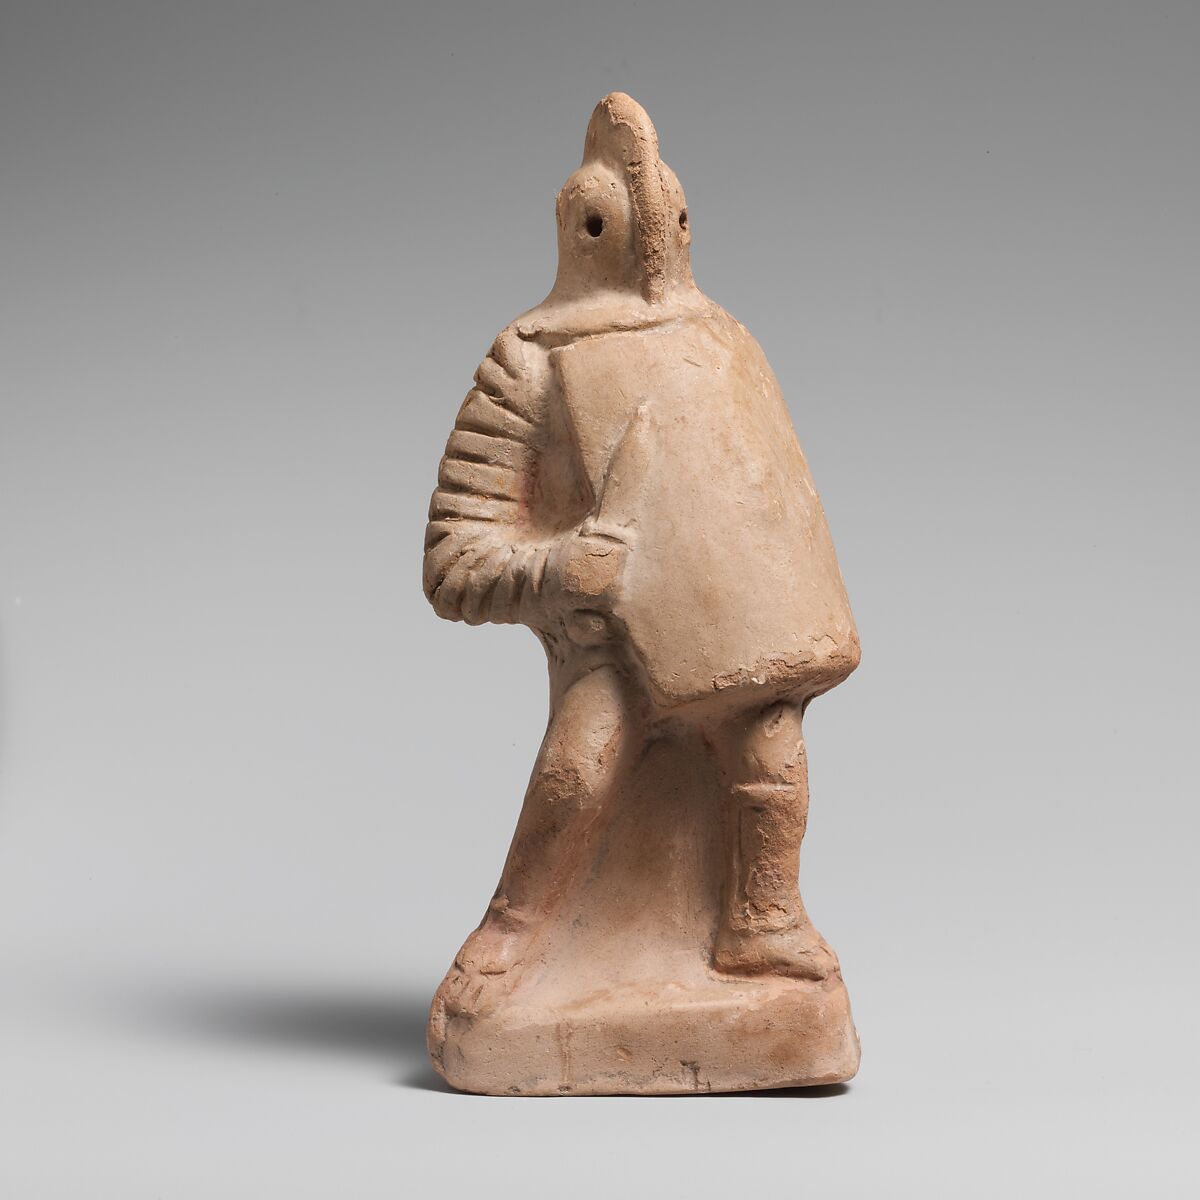 Terracotta statuette of a gladiator